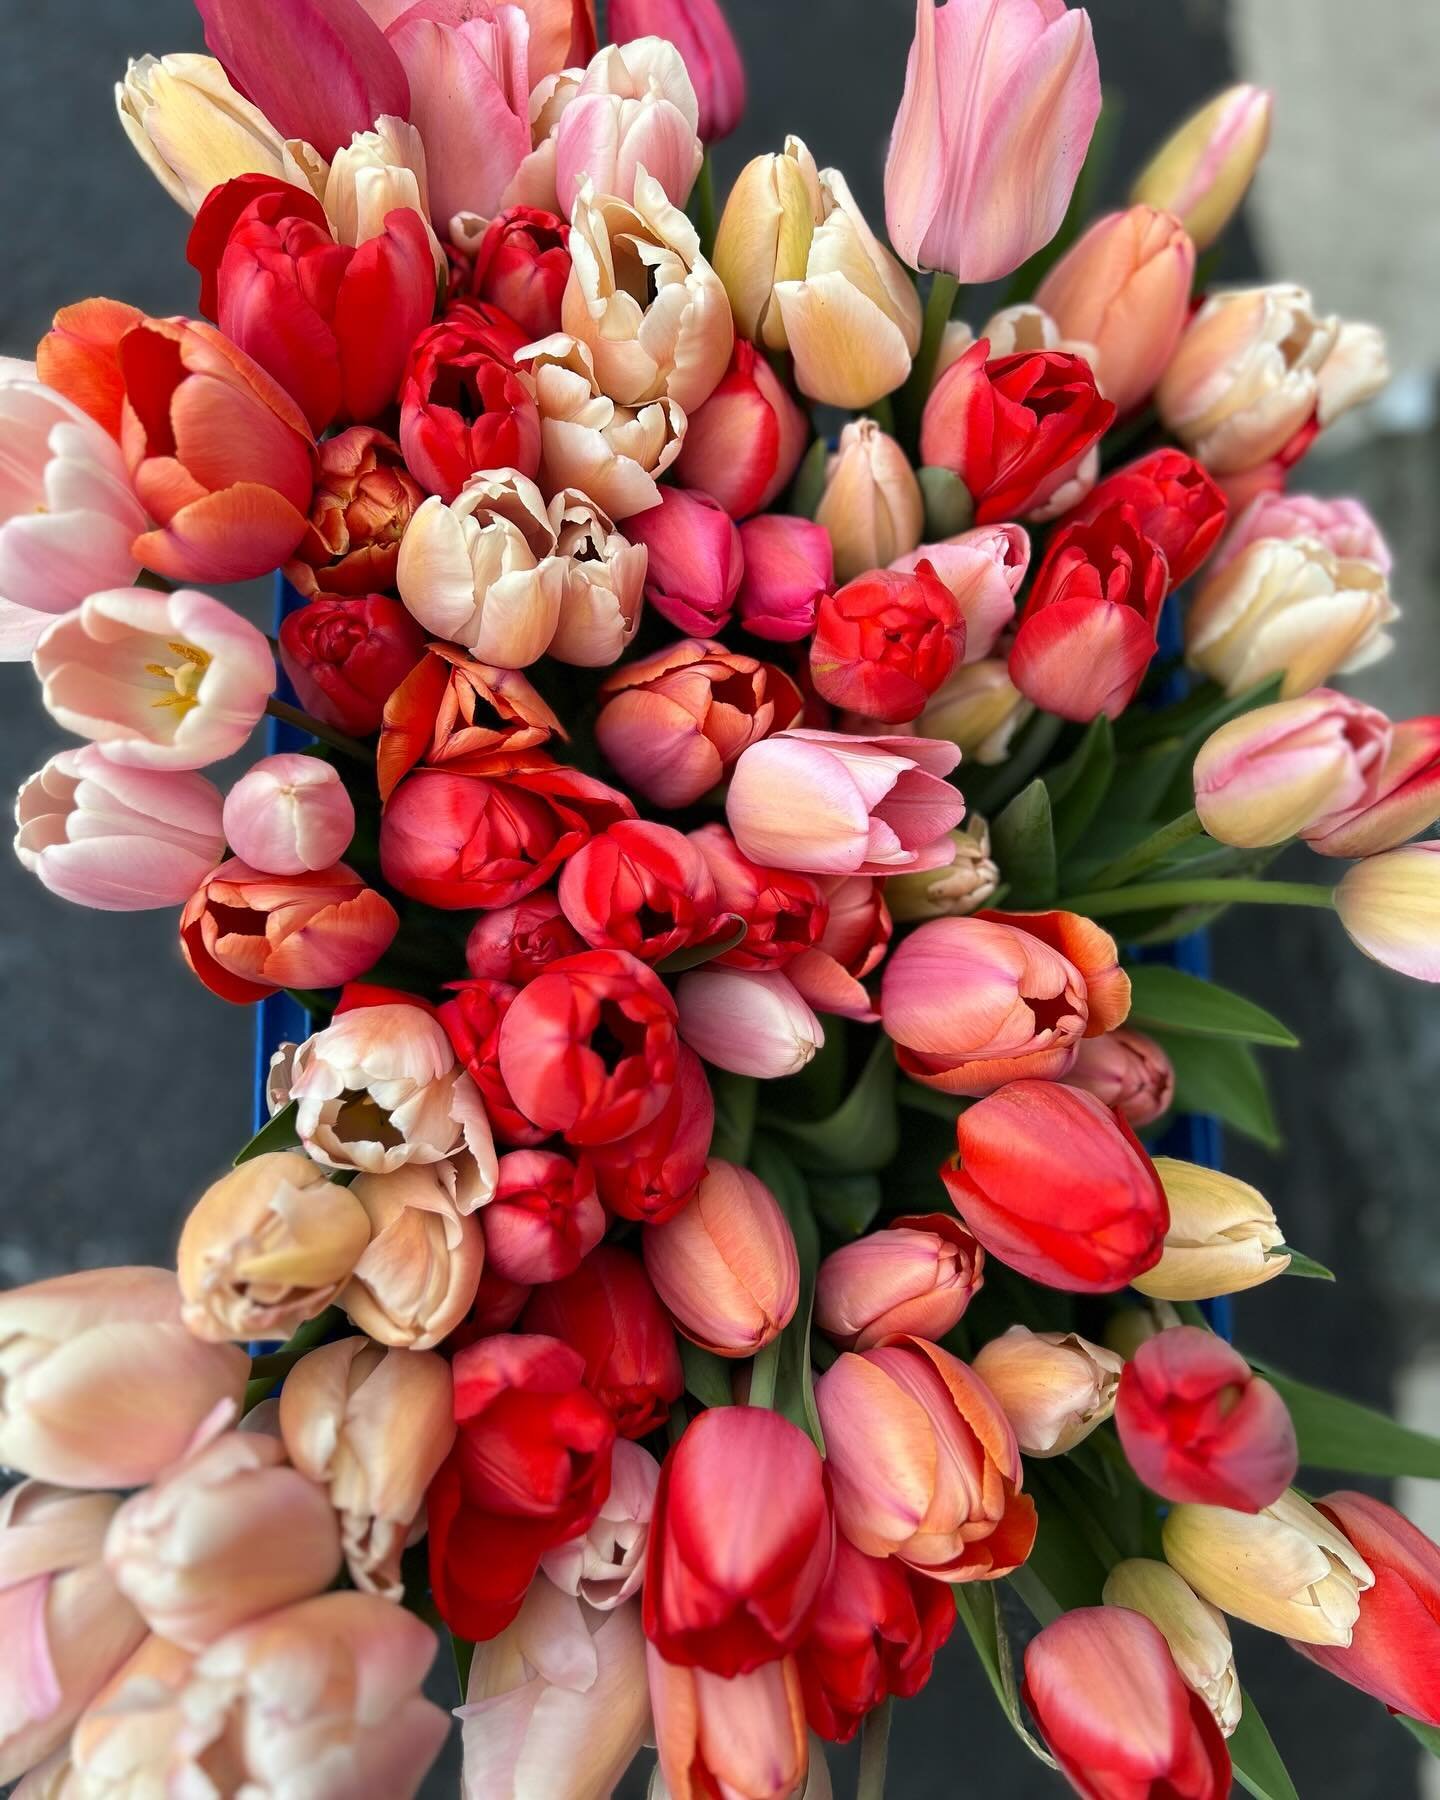 On a dim day nothing is better than a bucket of Darwins&hellip;.. #frescheflowers #springisintheair